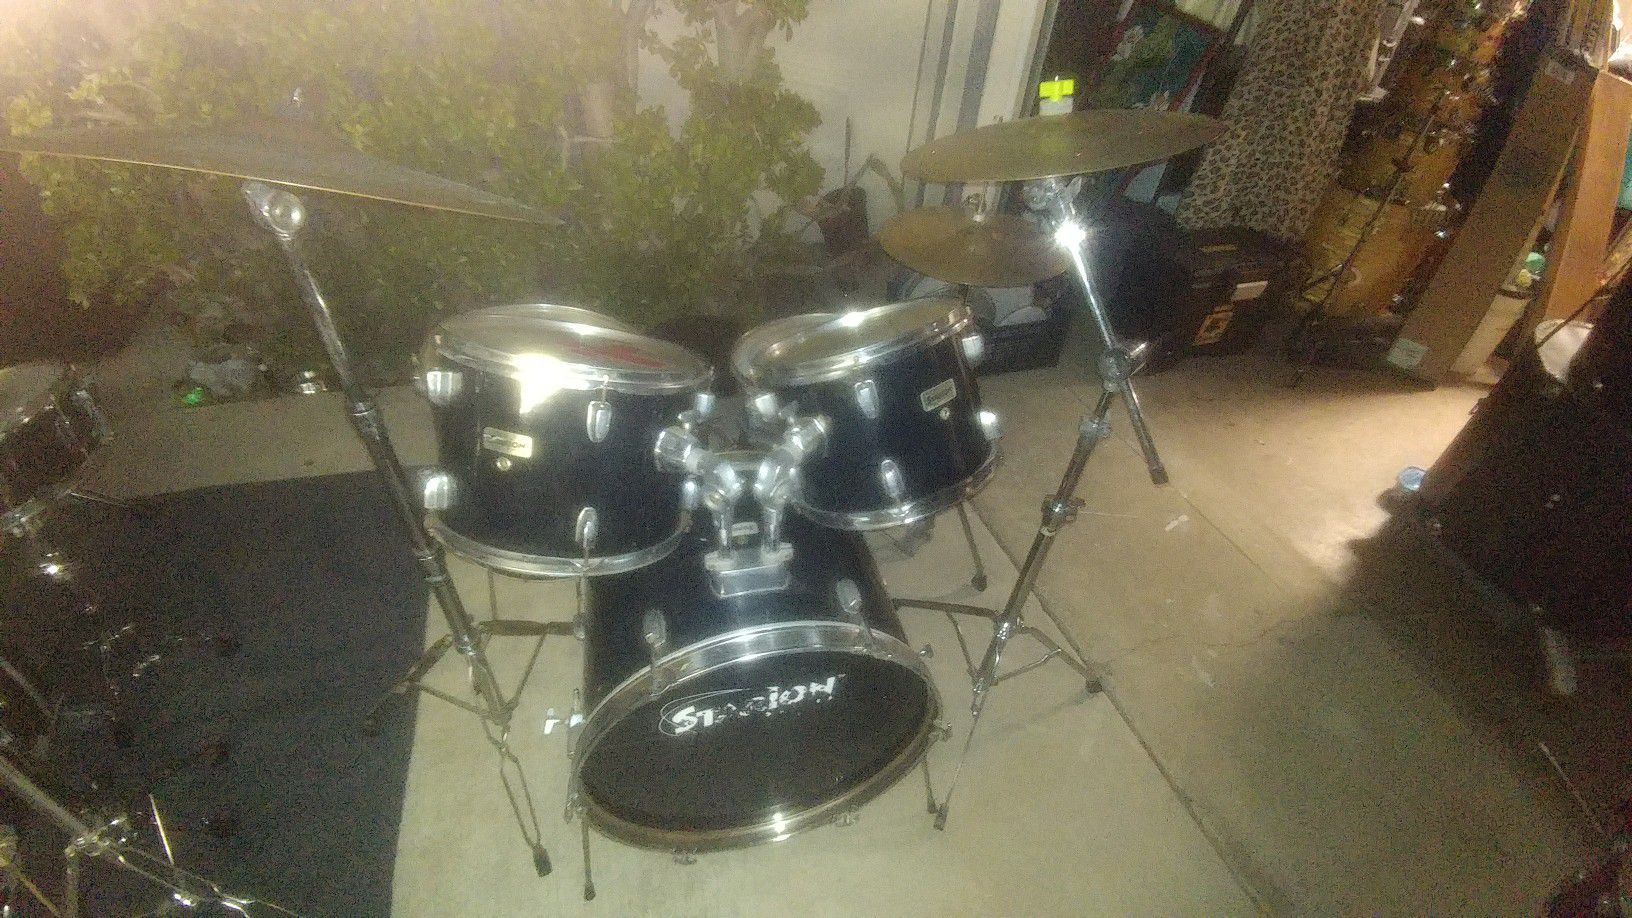 Old Starion 5 pc Drum Set in Black Plastic